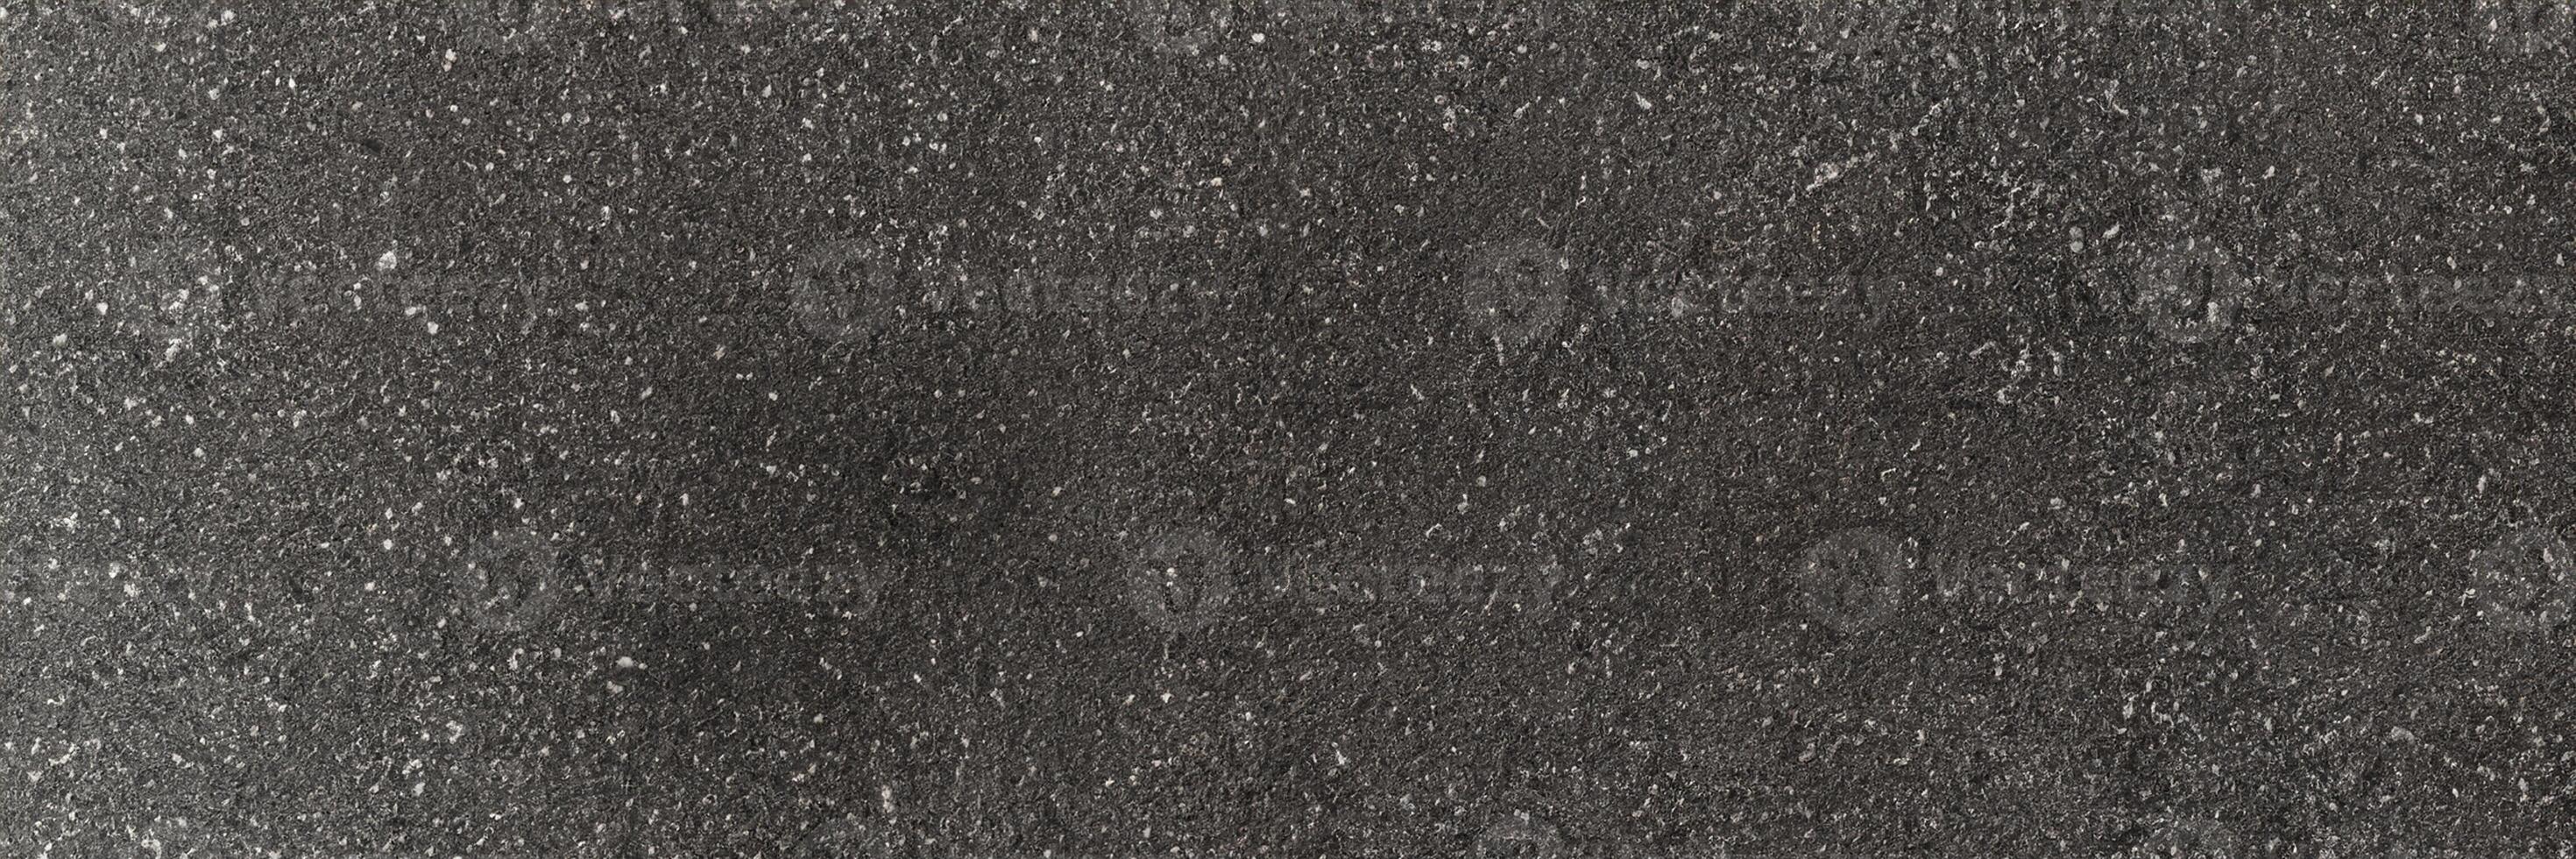 Panorama black asphalt road texture and background. Horizontal tarmac grey grainy on asphalt road. photo